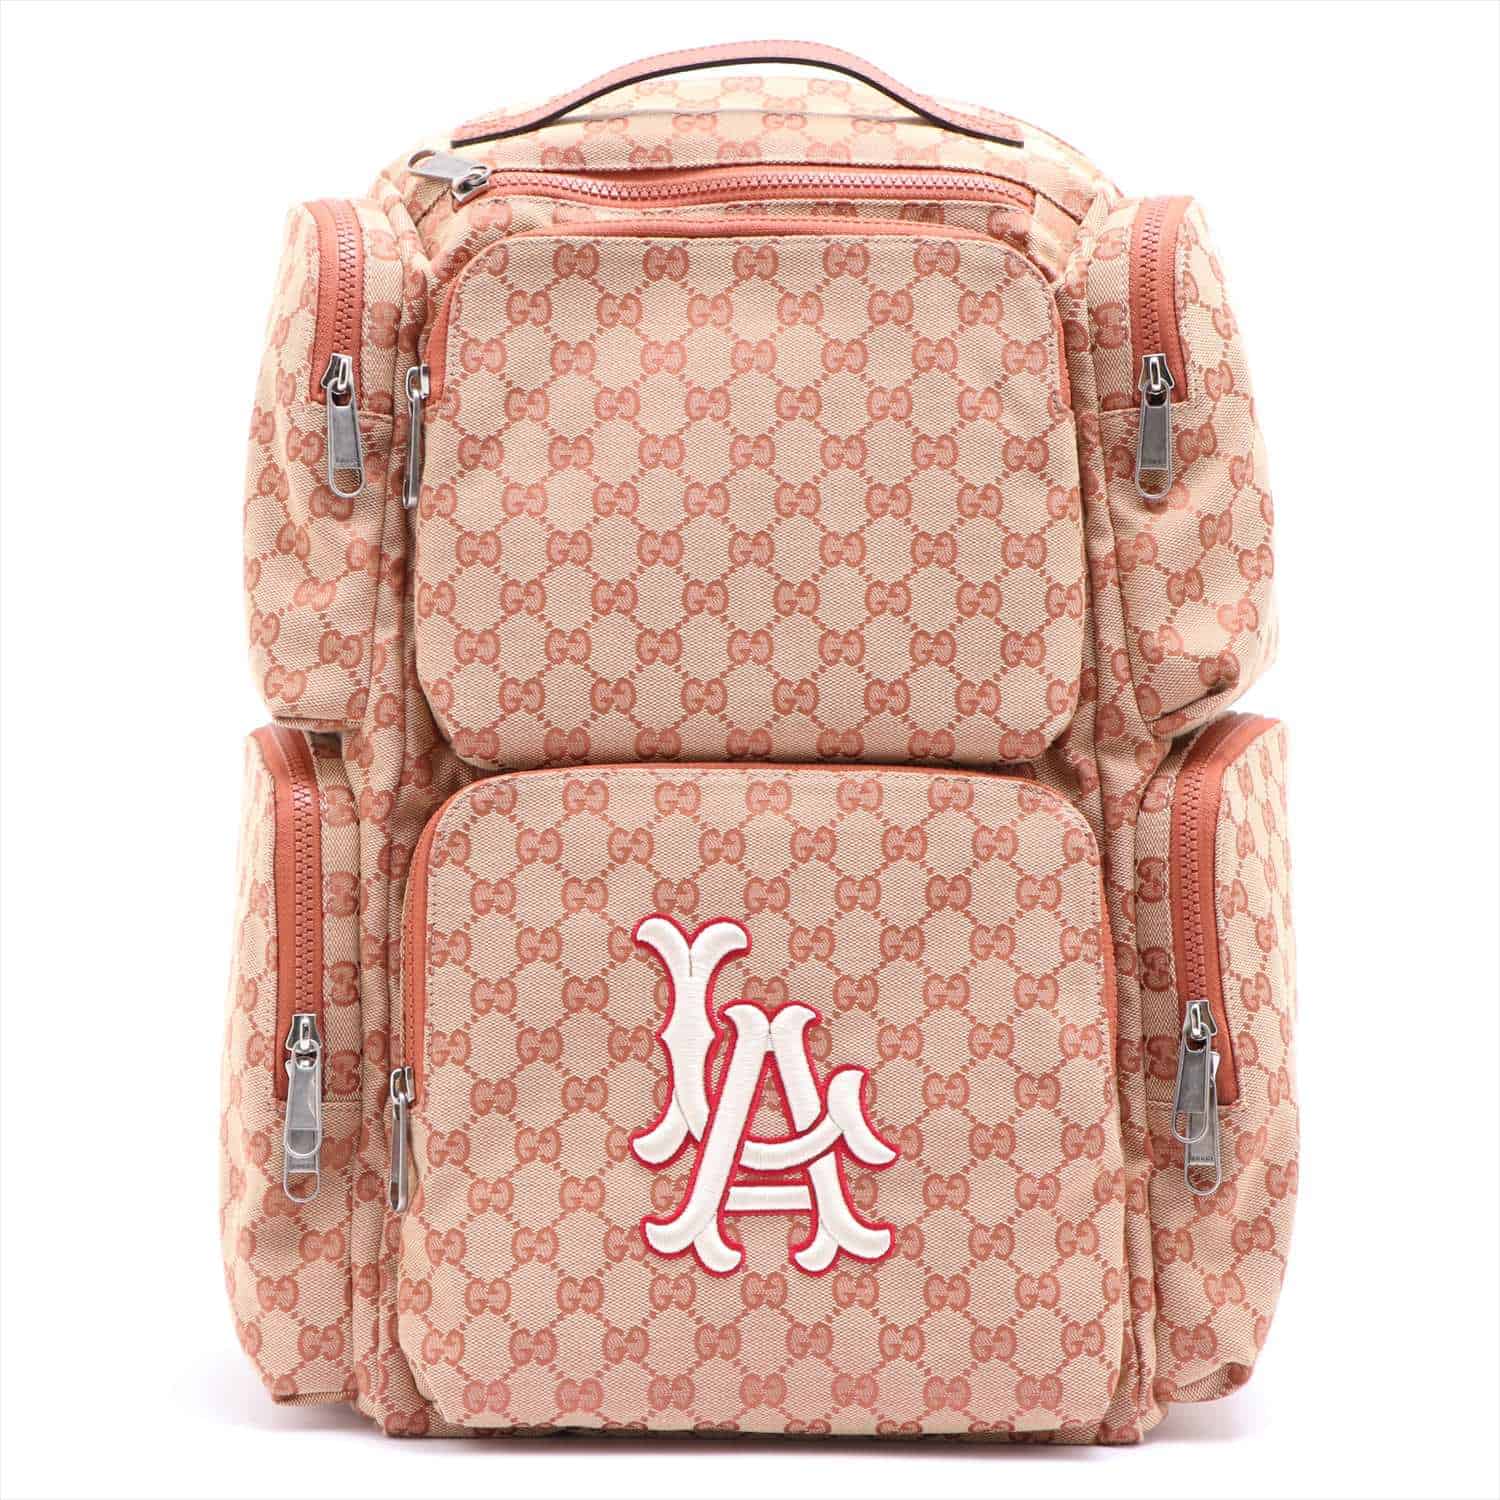 Gucci GG Canvas Backpack Beige 552872  LA Angels Large